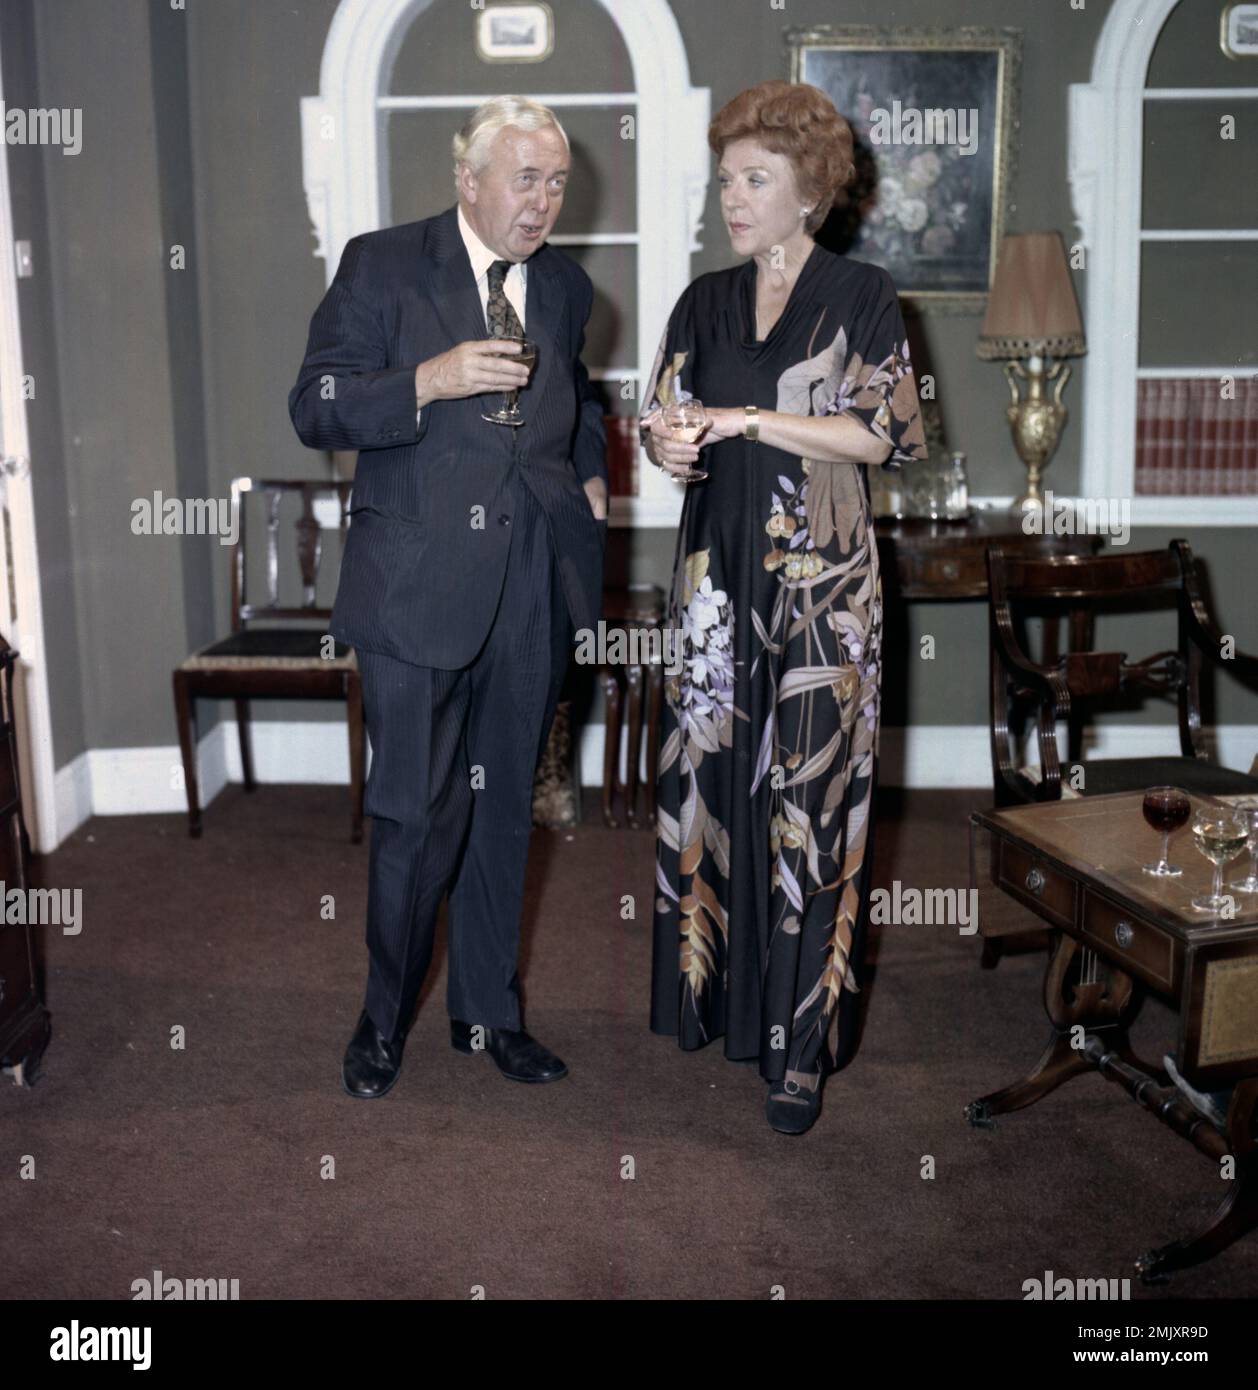 When Harold met Nolly - UK Prime Minister Harold Wilson a big fan of Crossroad meets Noele Gordon on the Crossroads set. Stock Photo